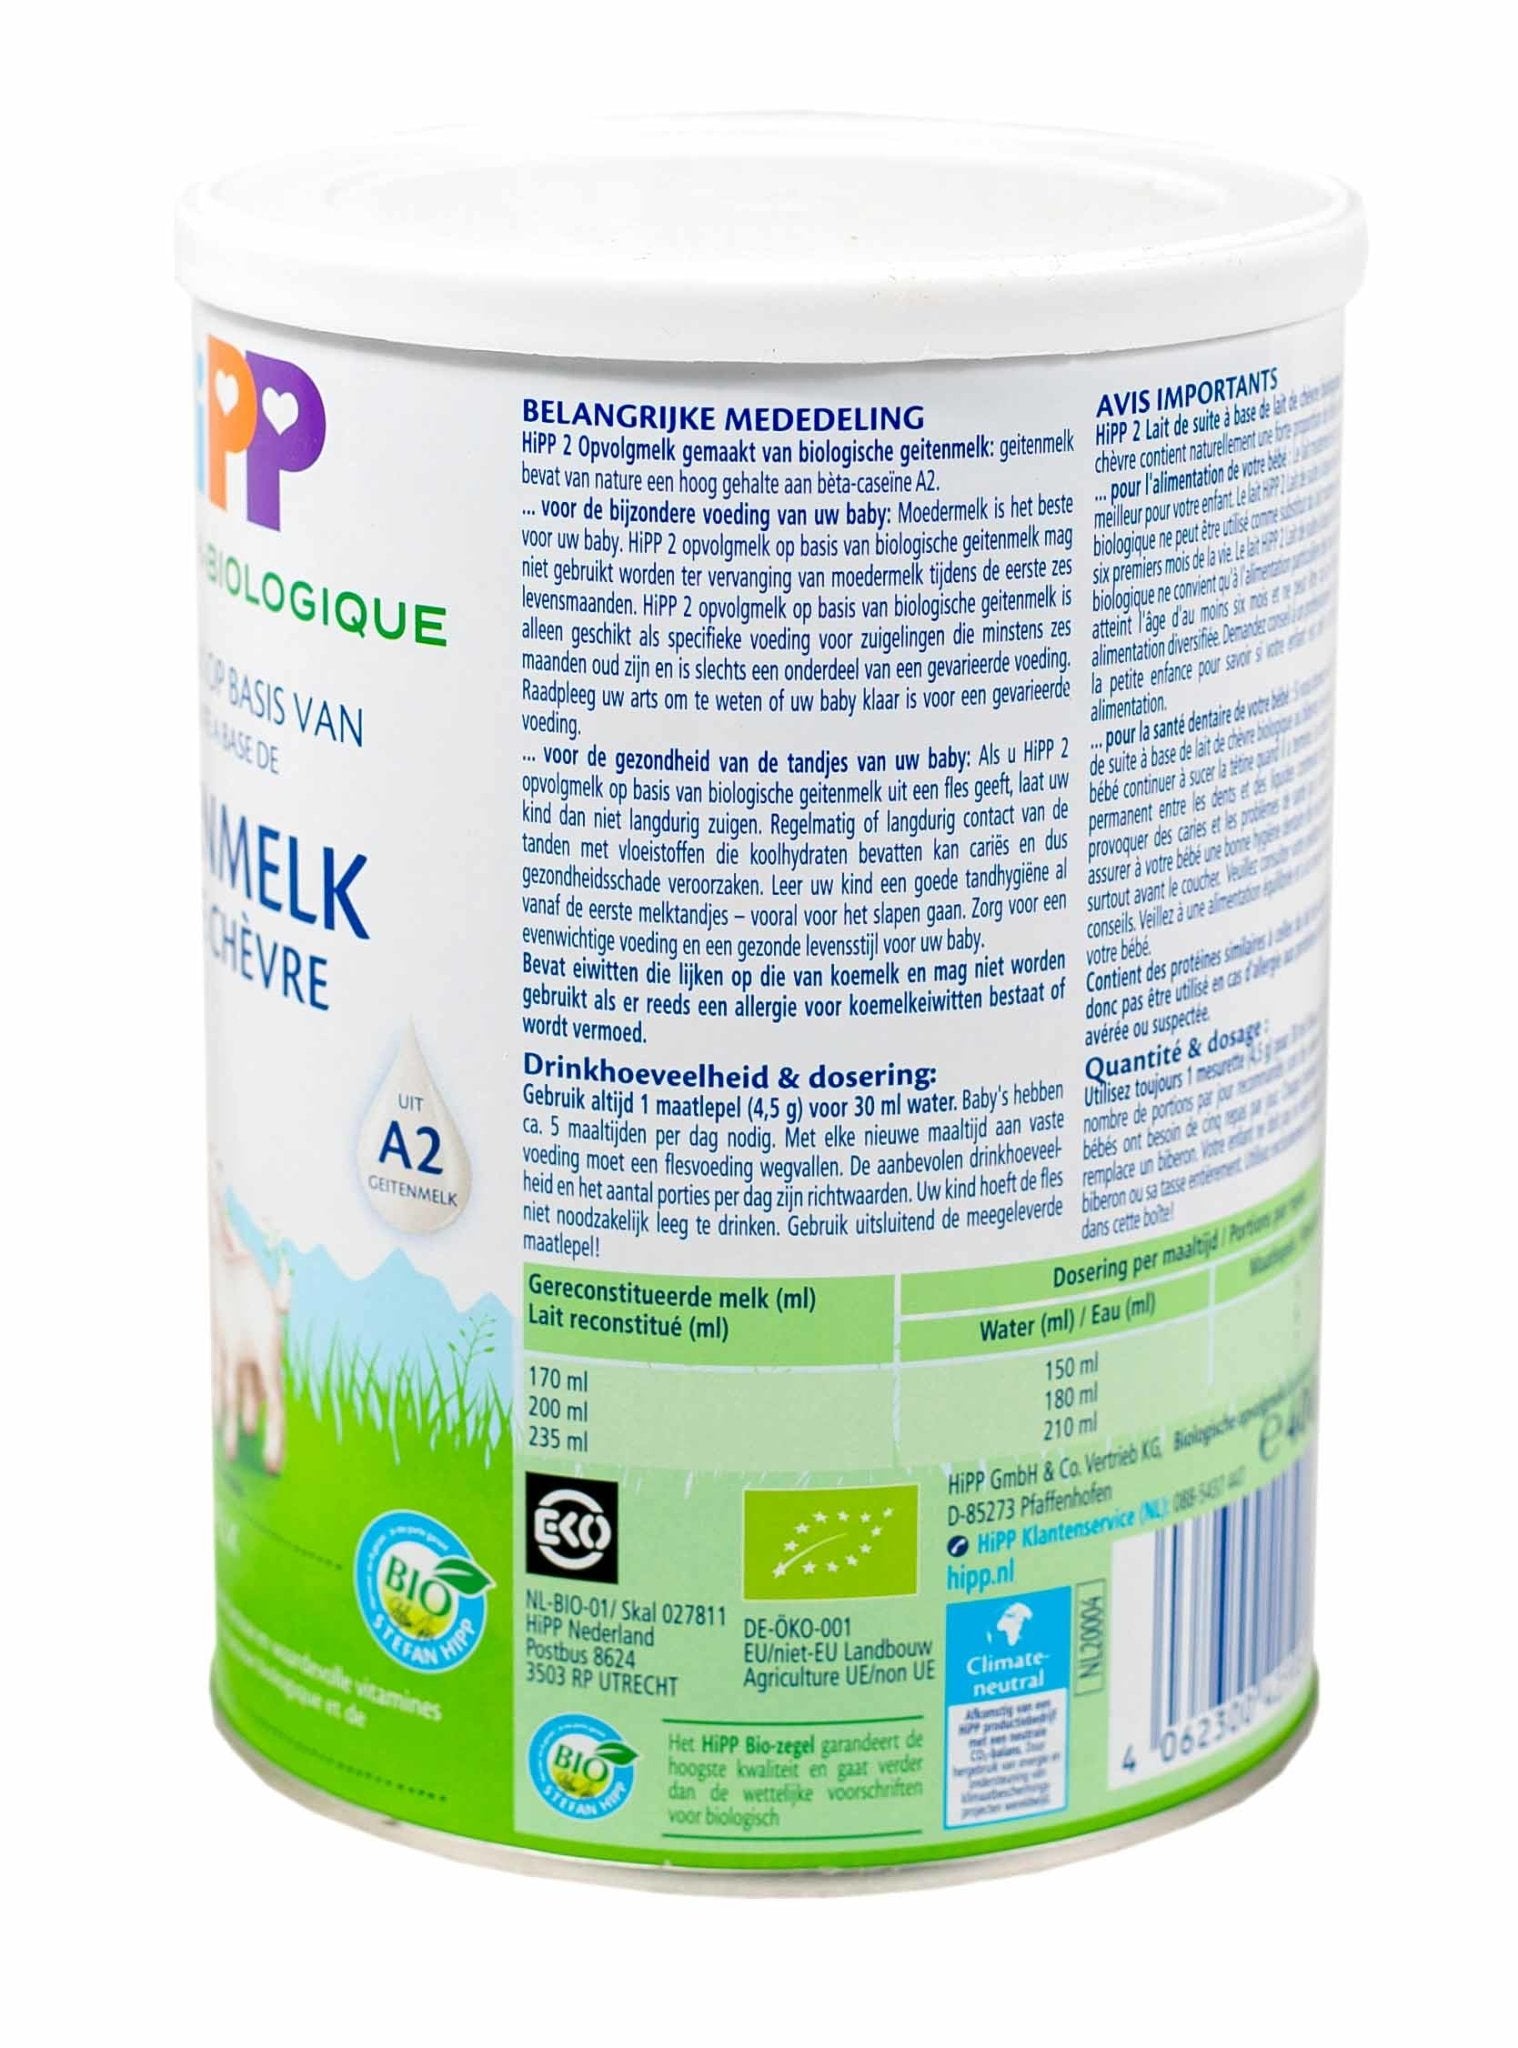 Hipp Organic 1 Combiotic Follow-On Milk 800g - Beyond Fresh